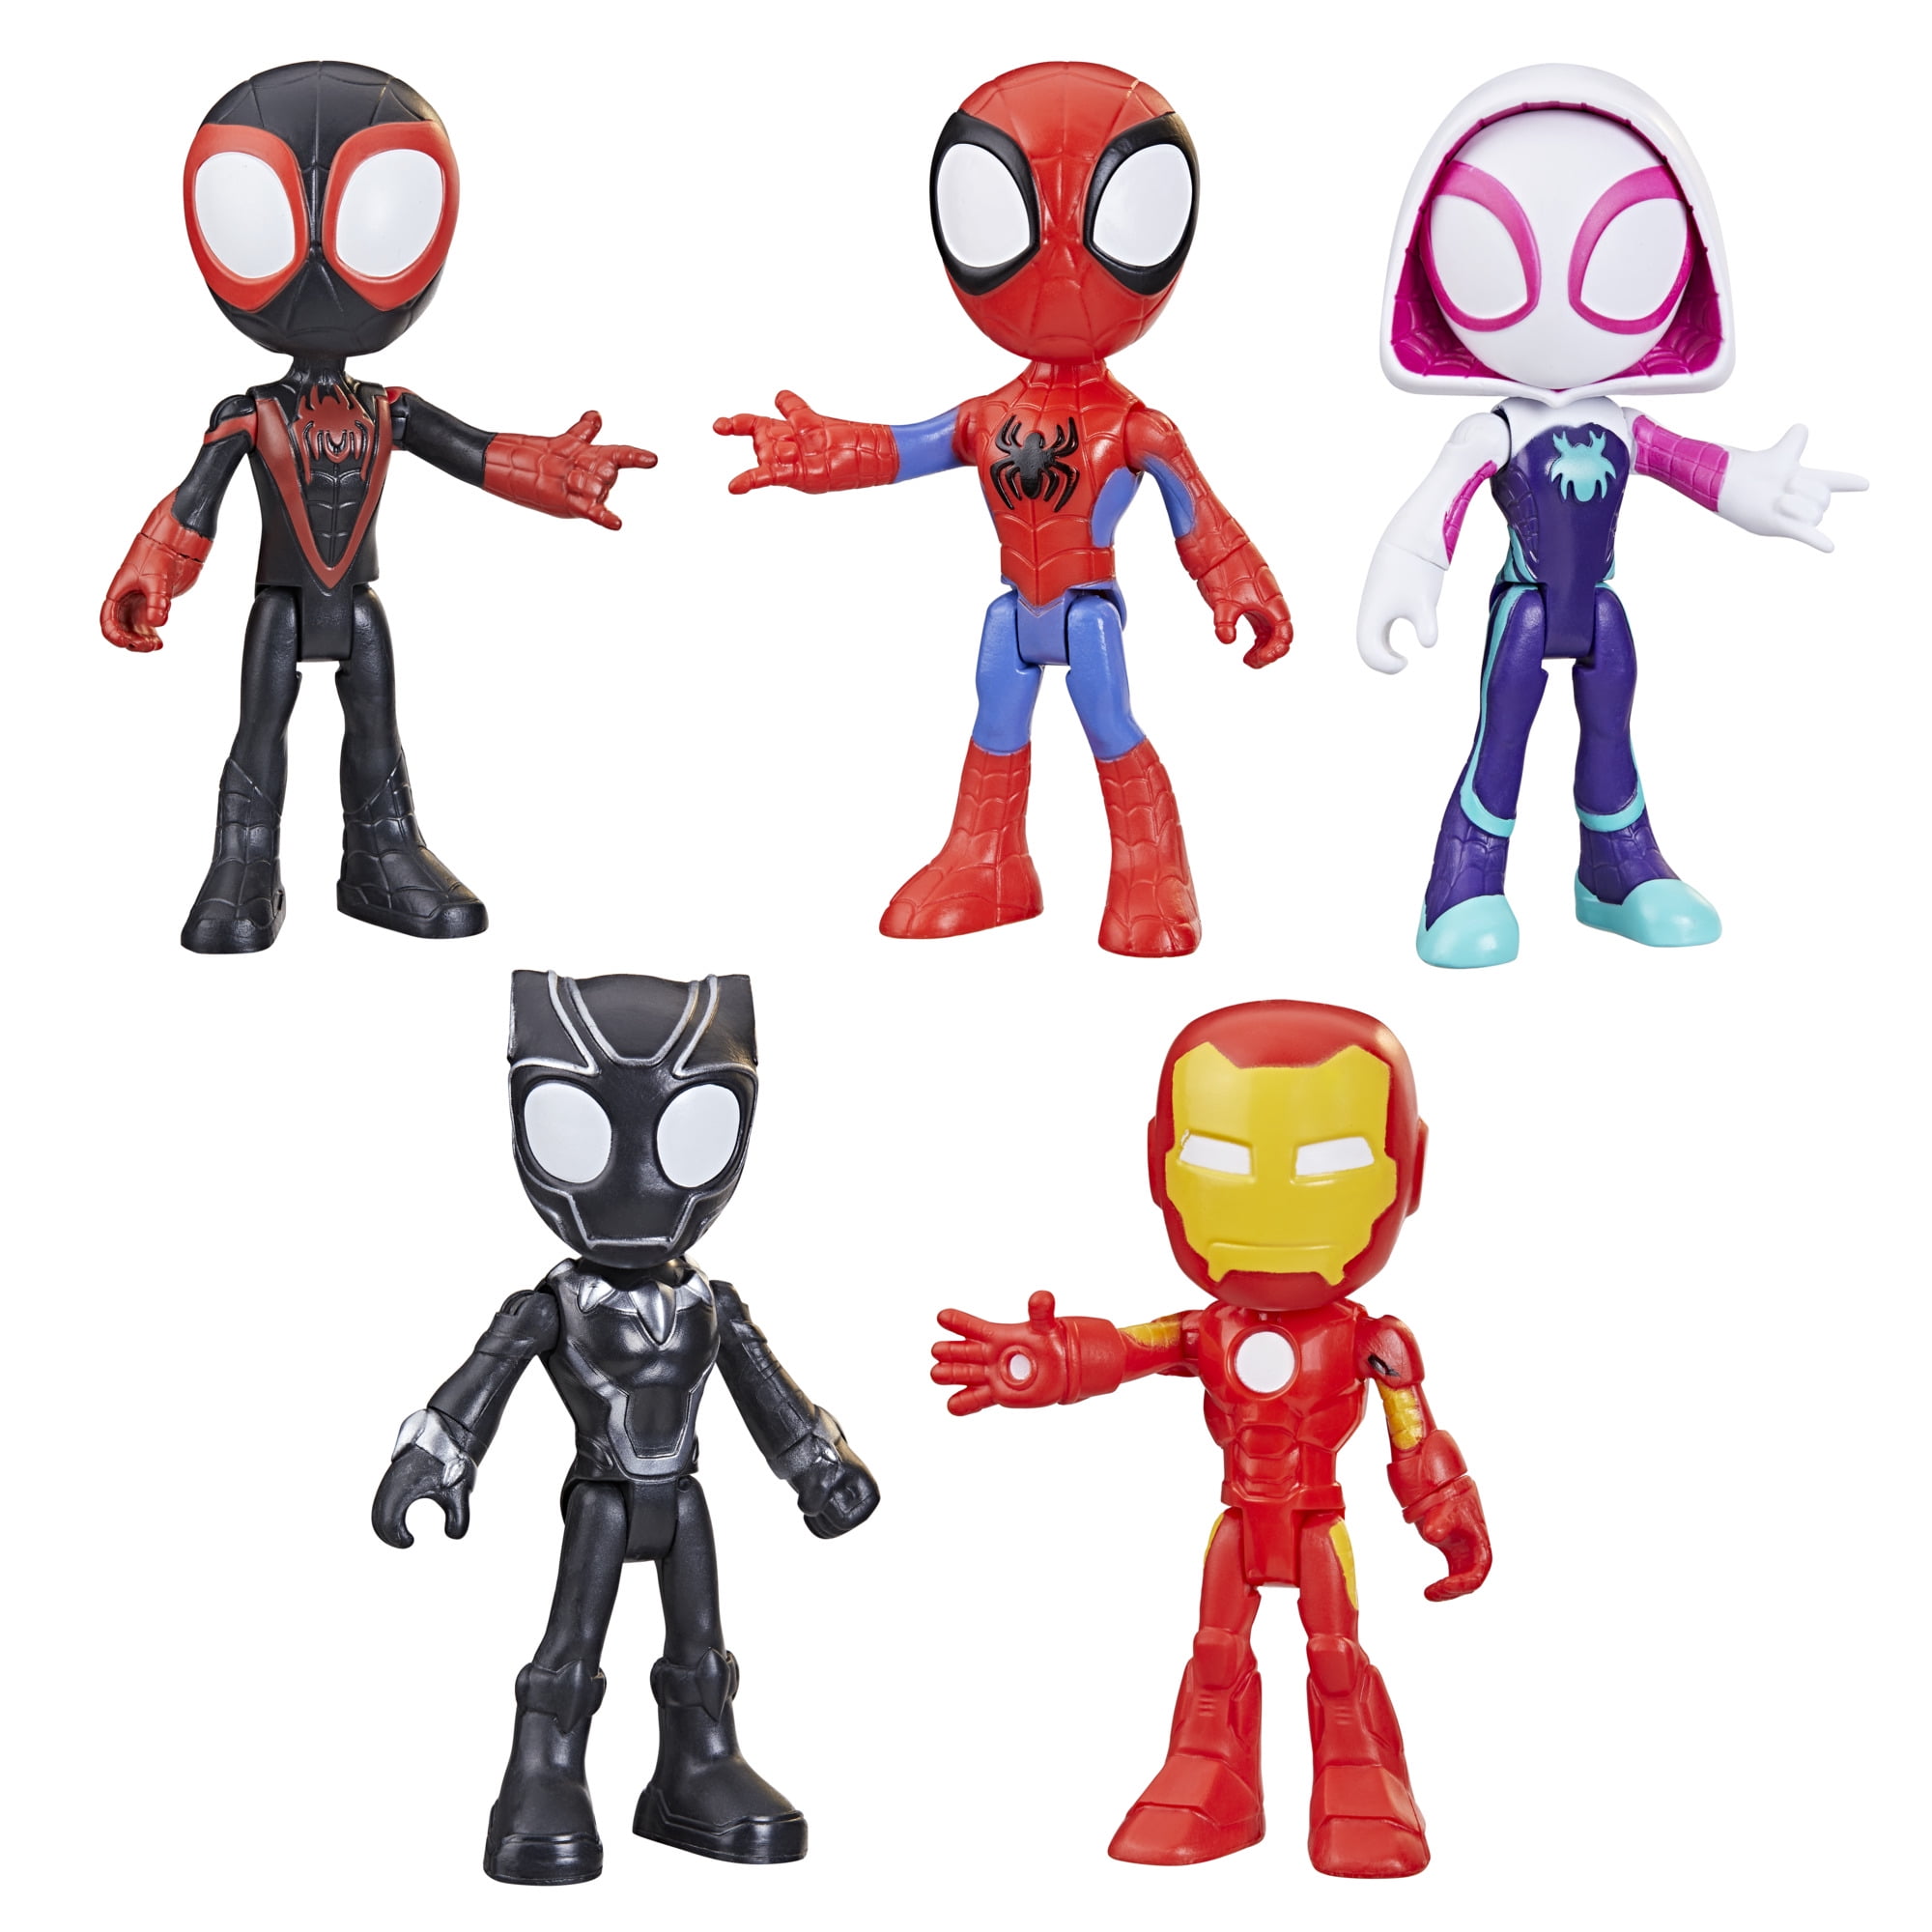 Marvel spidey and his amazing friends - figurine de super-héros